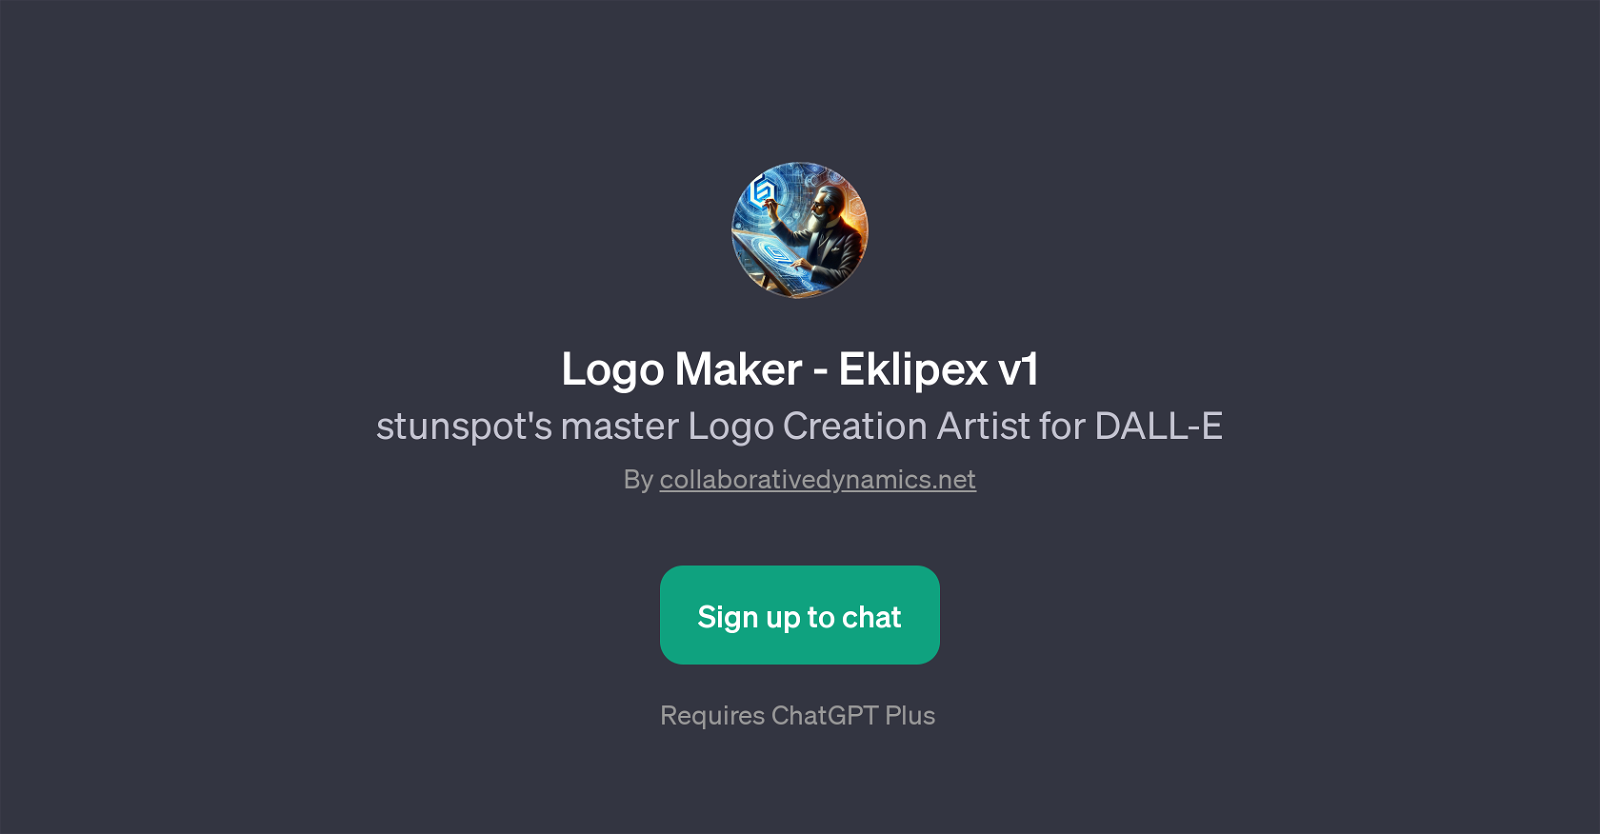 Logo Maker - Eklipex v1 website